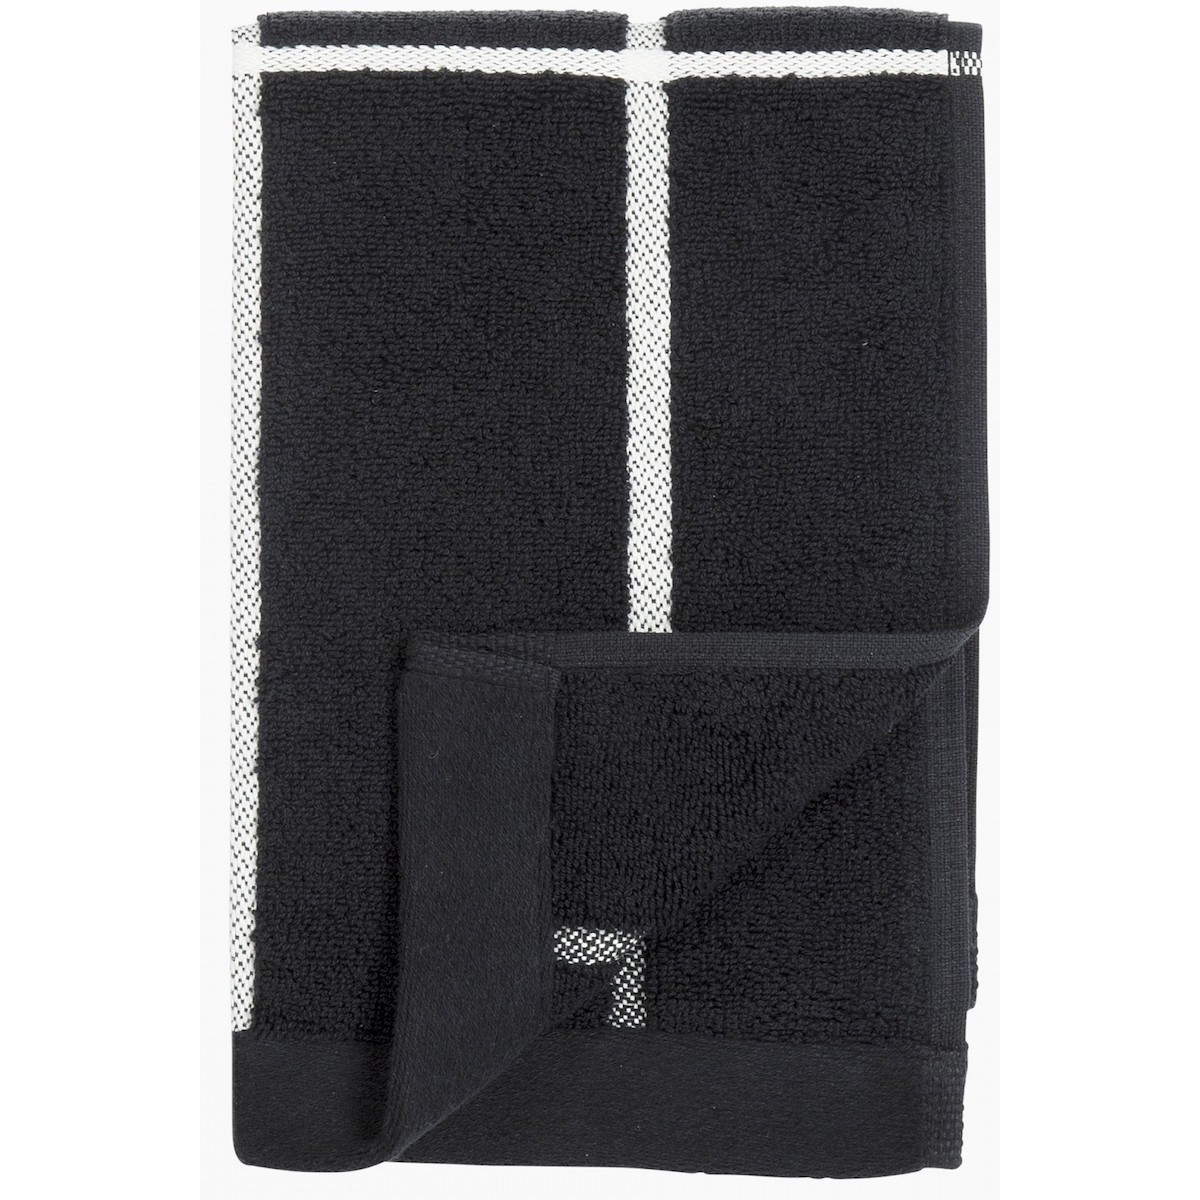 30x50cm - Tiiliskivi 910 - Marimekko guest towel